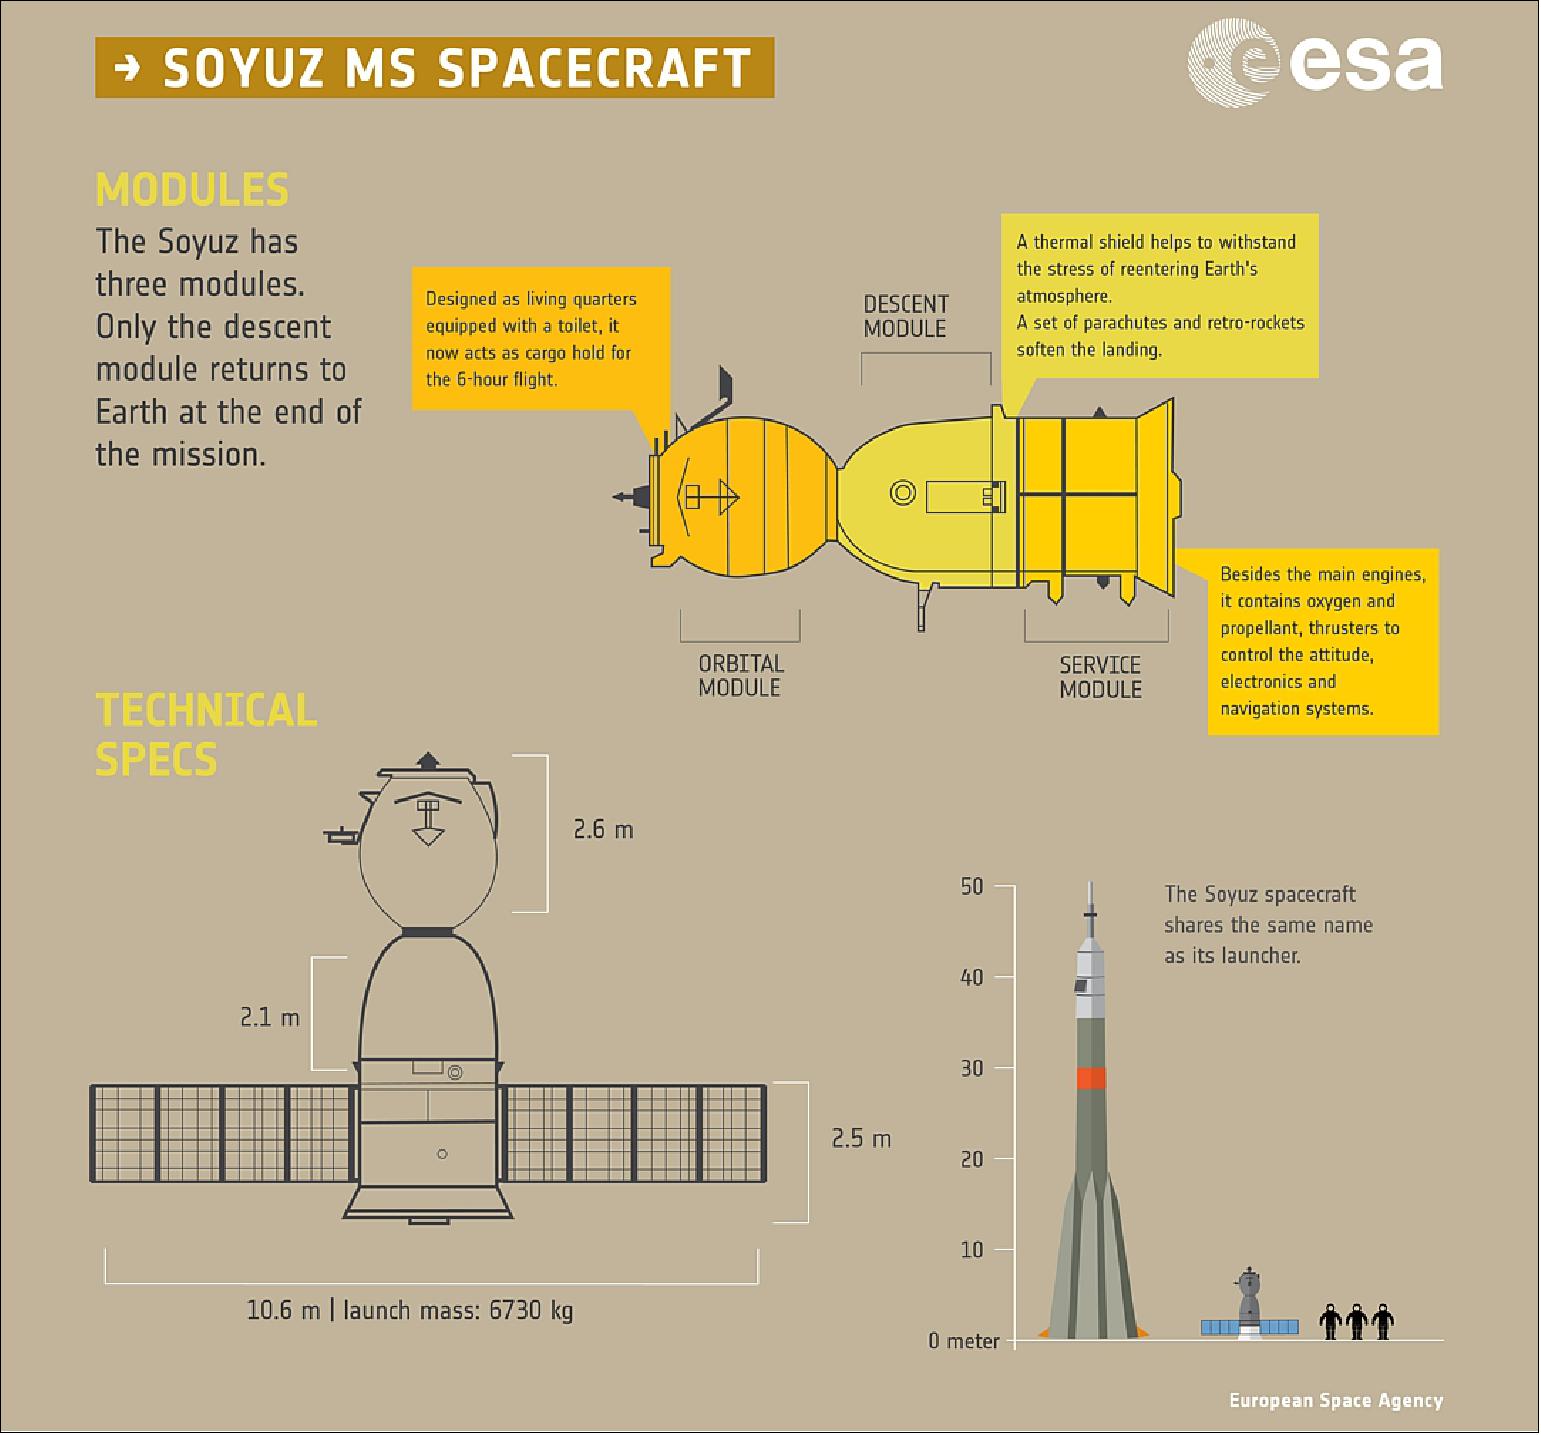 Figure 114: Soyuz MS spacecraft infographic - Modules and Specs (image credit: ESA)